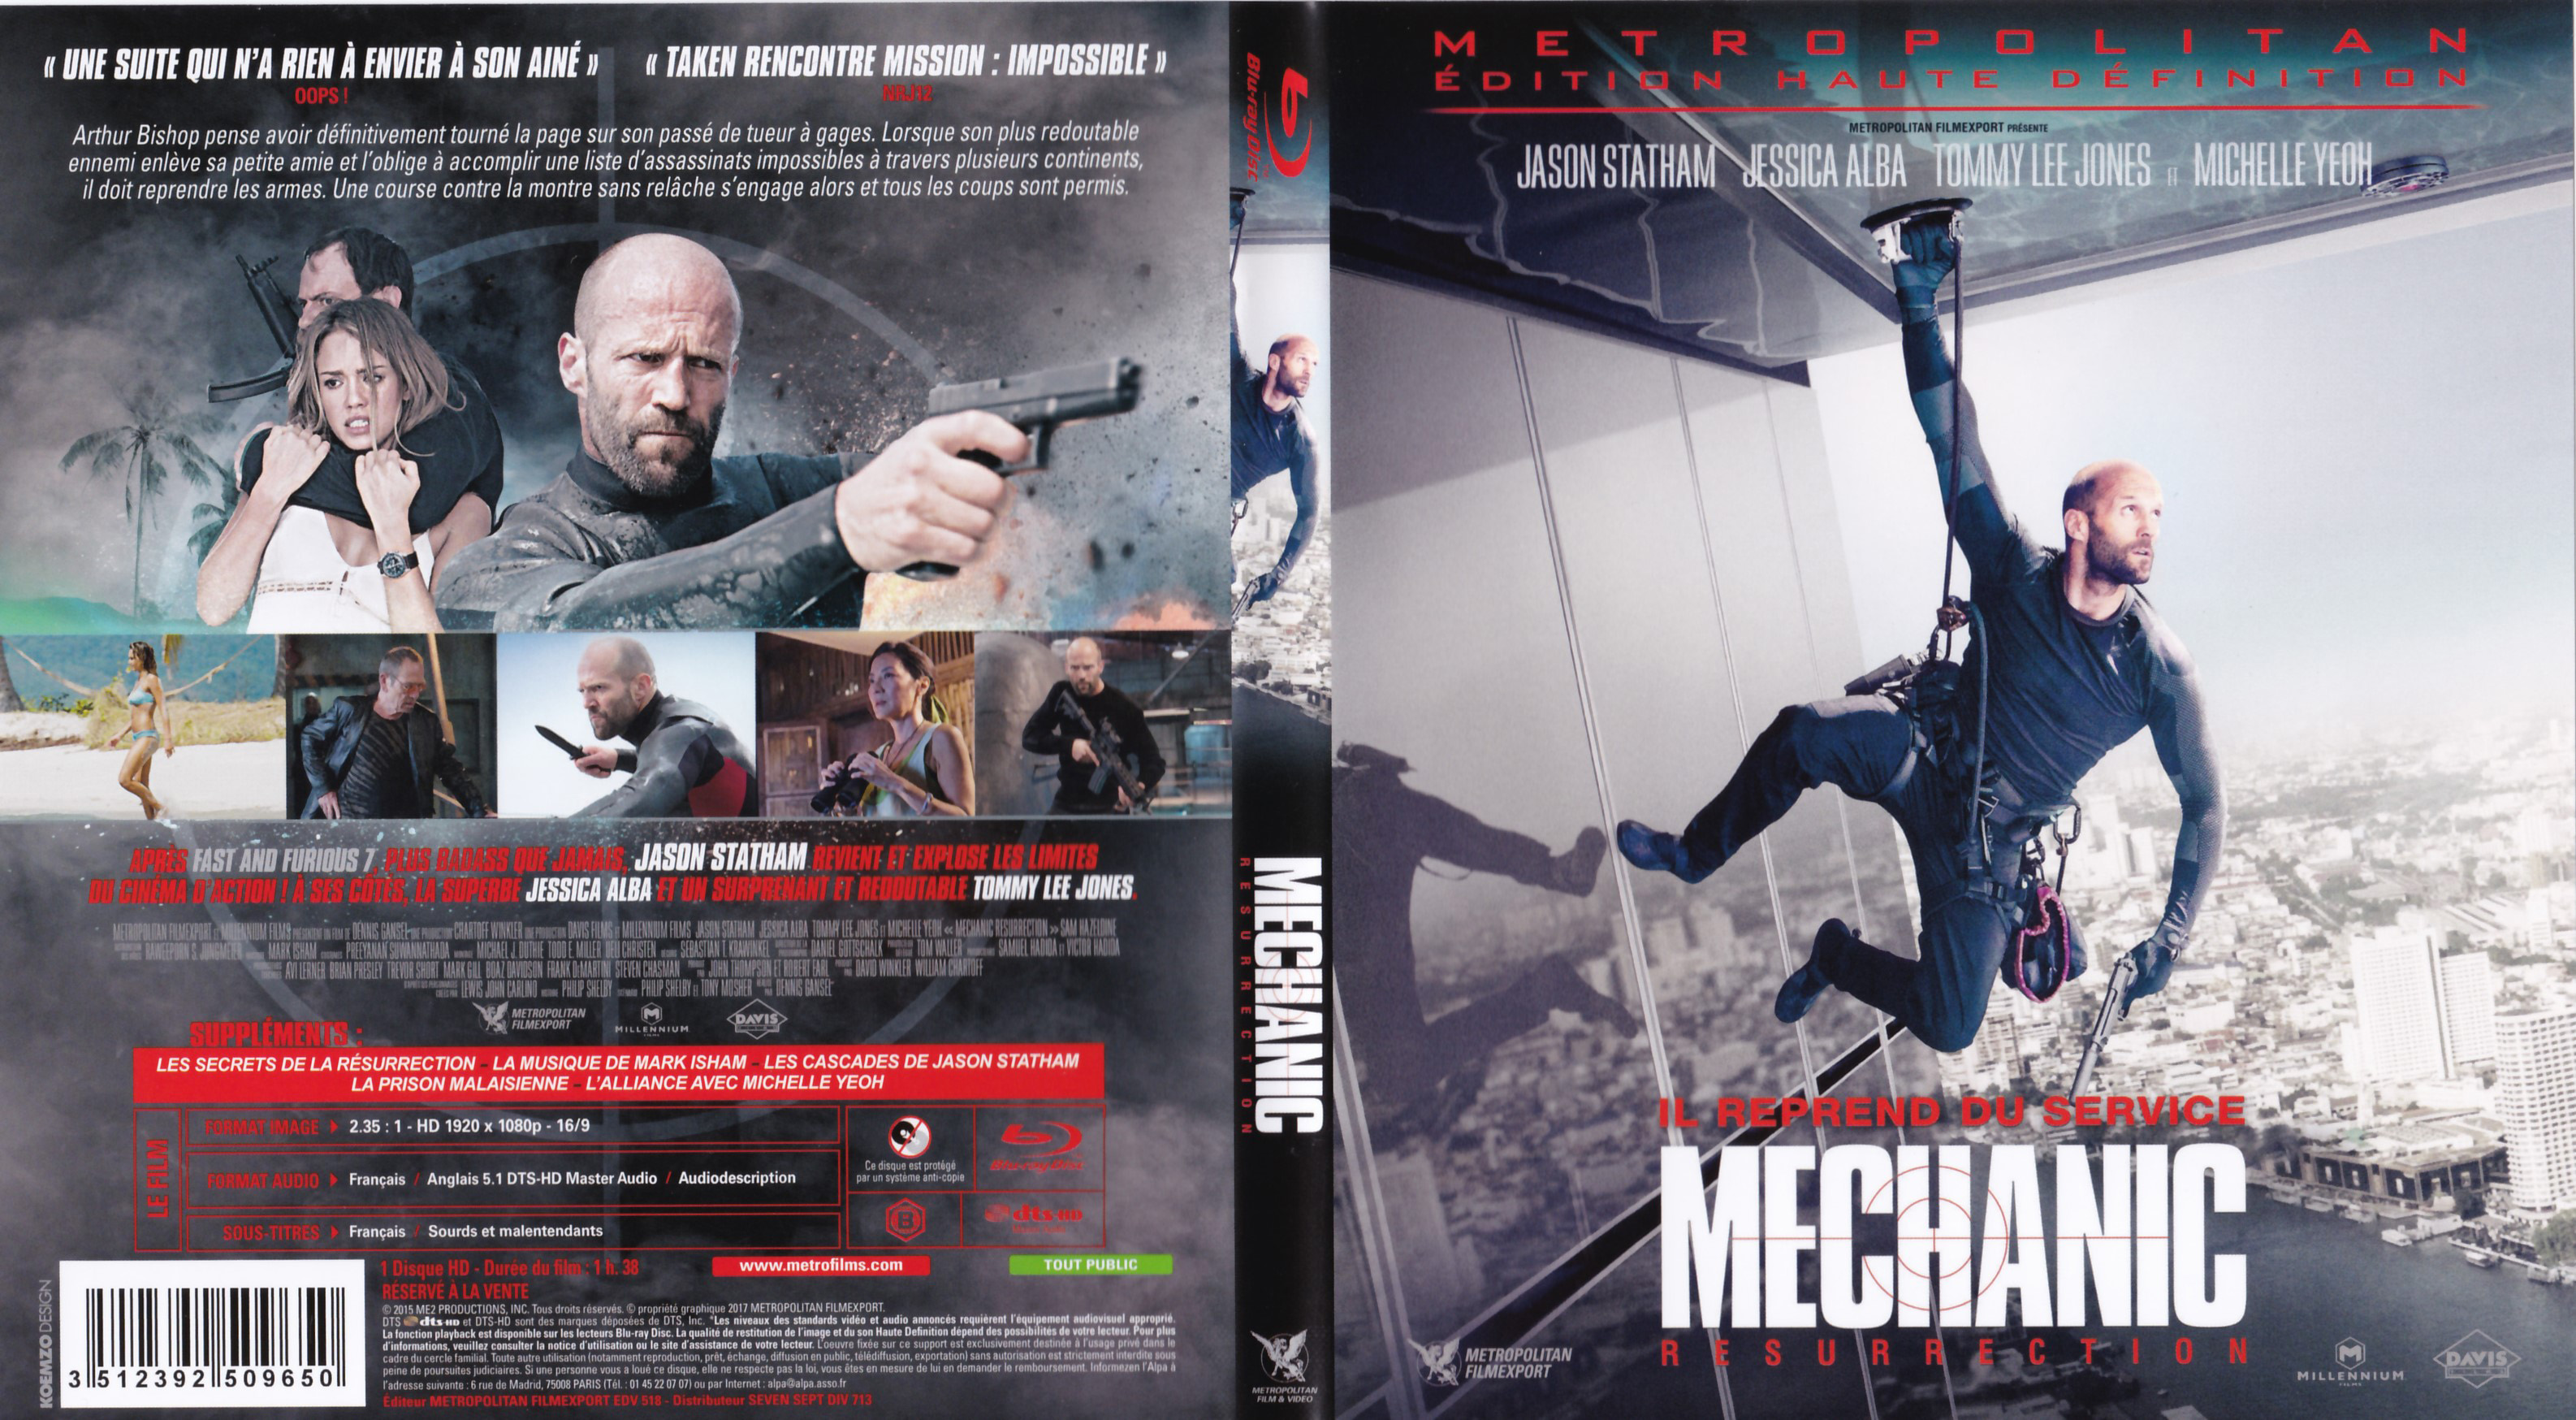 Jaquette DVD Mechanic Rsurrection (BLU-RAY)